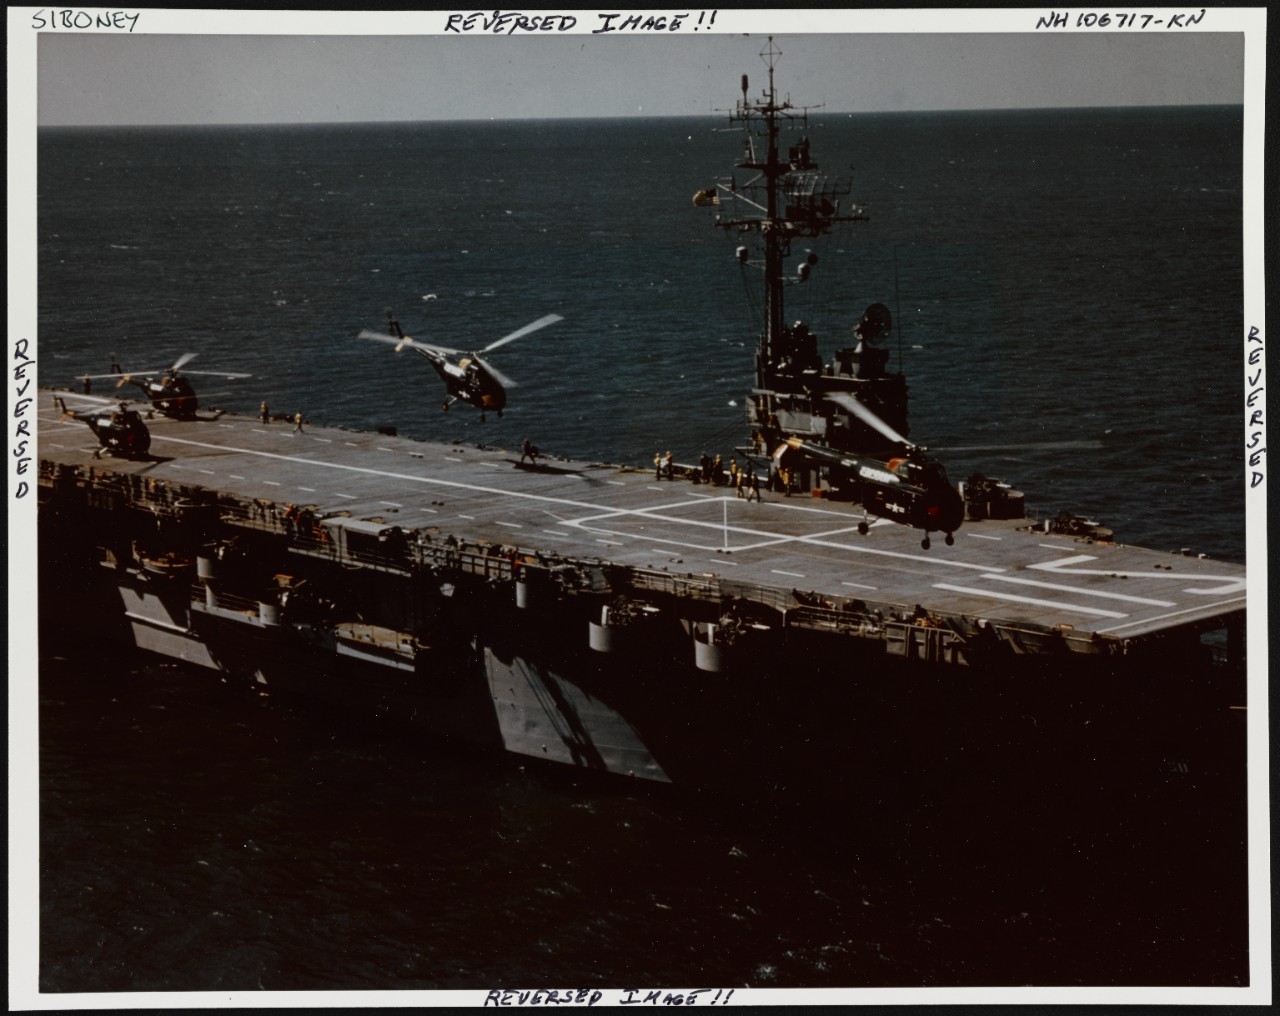 Photo # NH 106717-KN USS Siboney